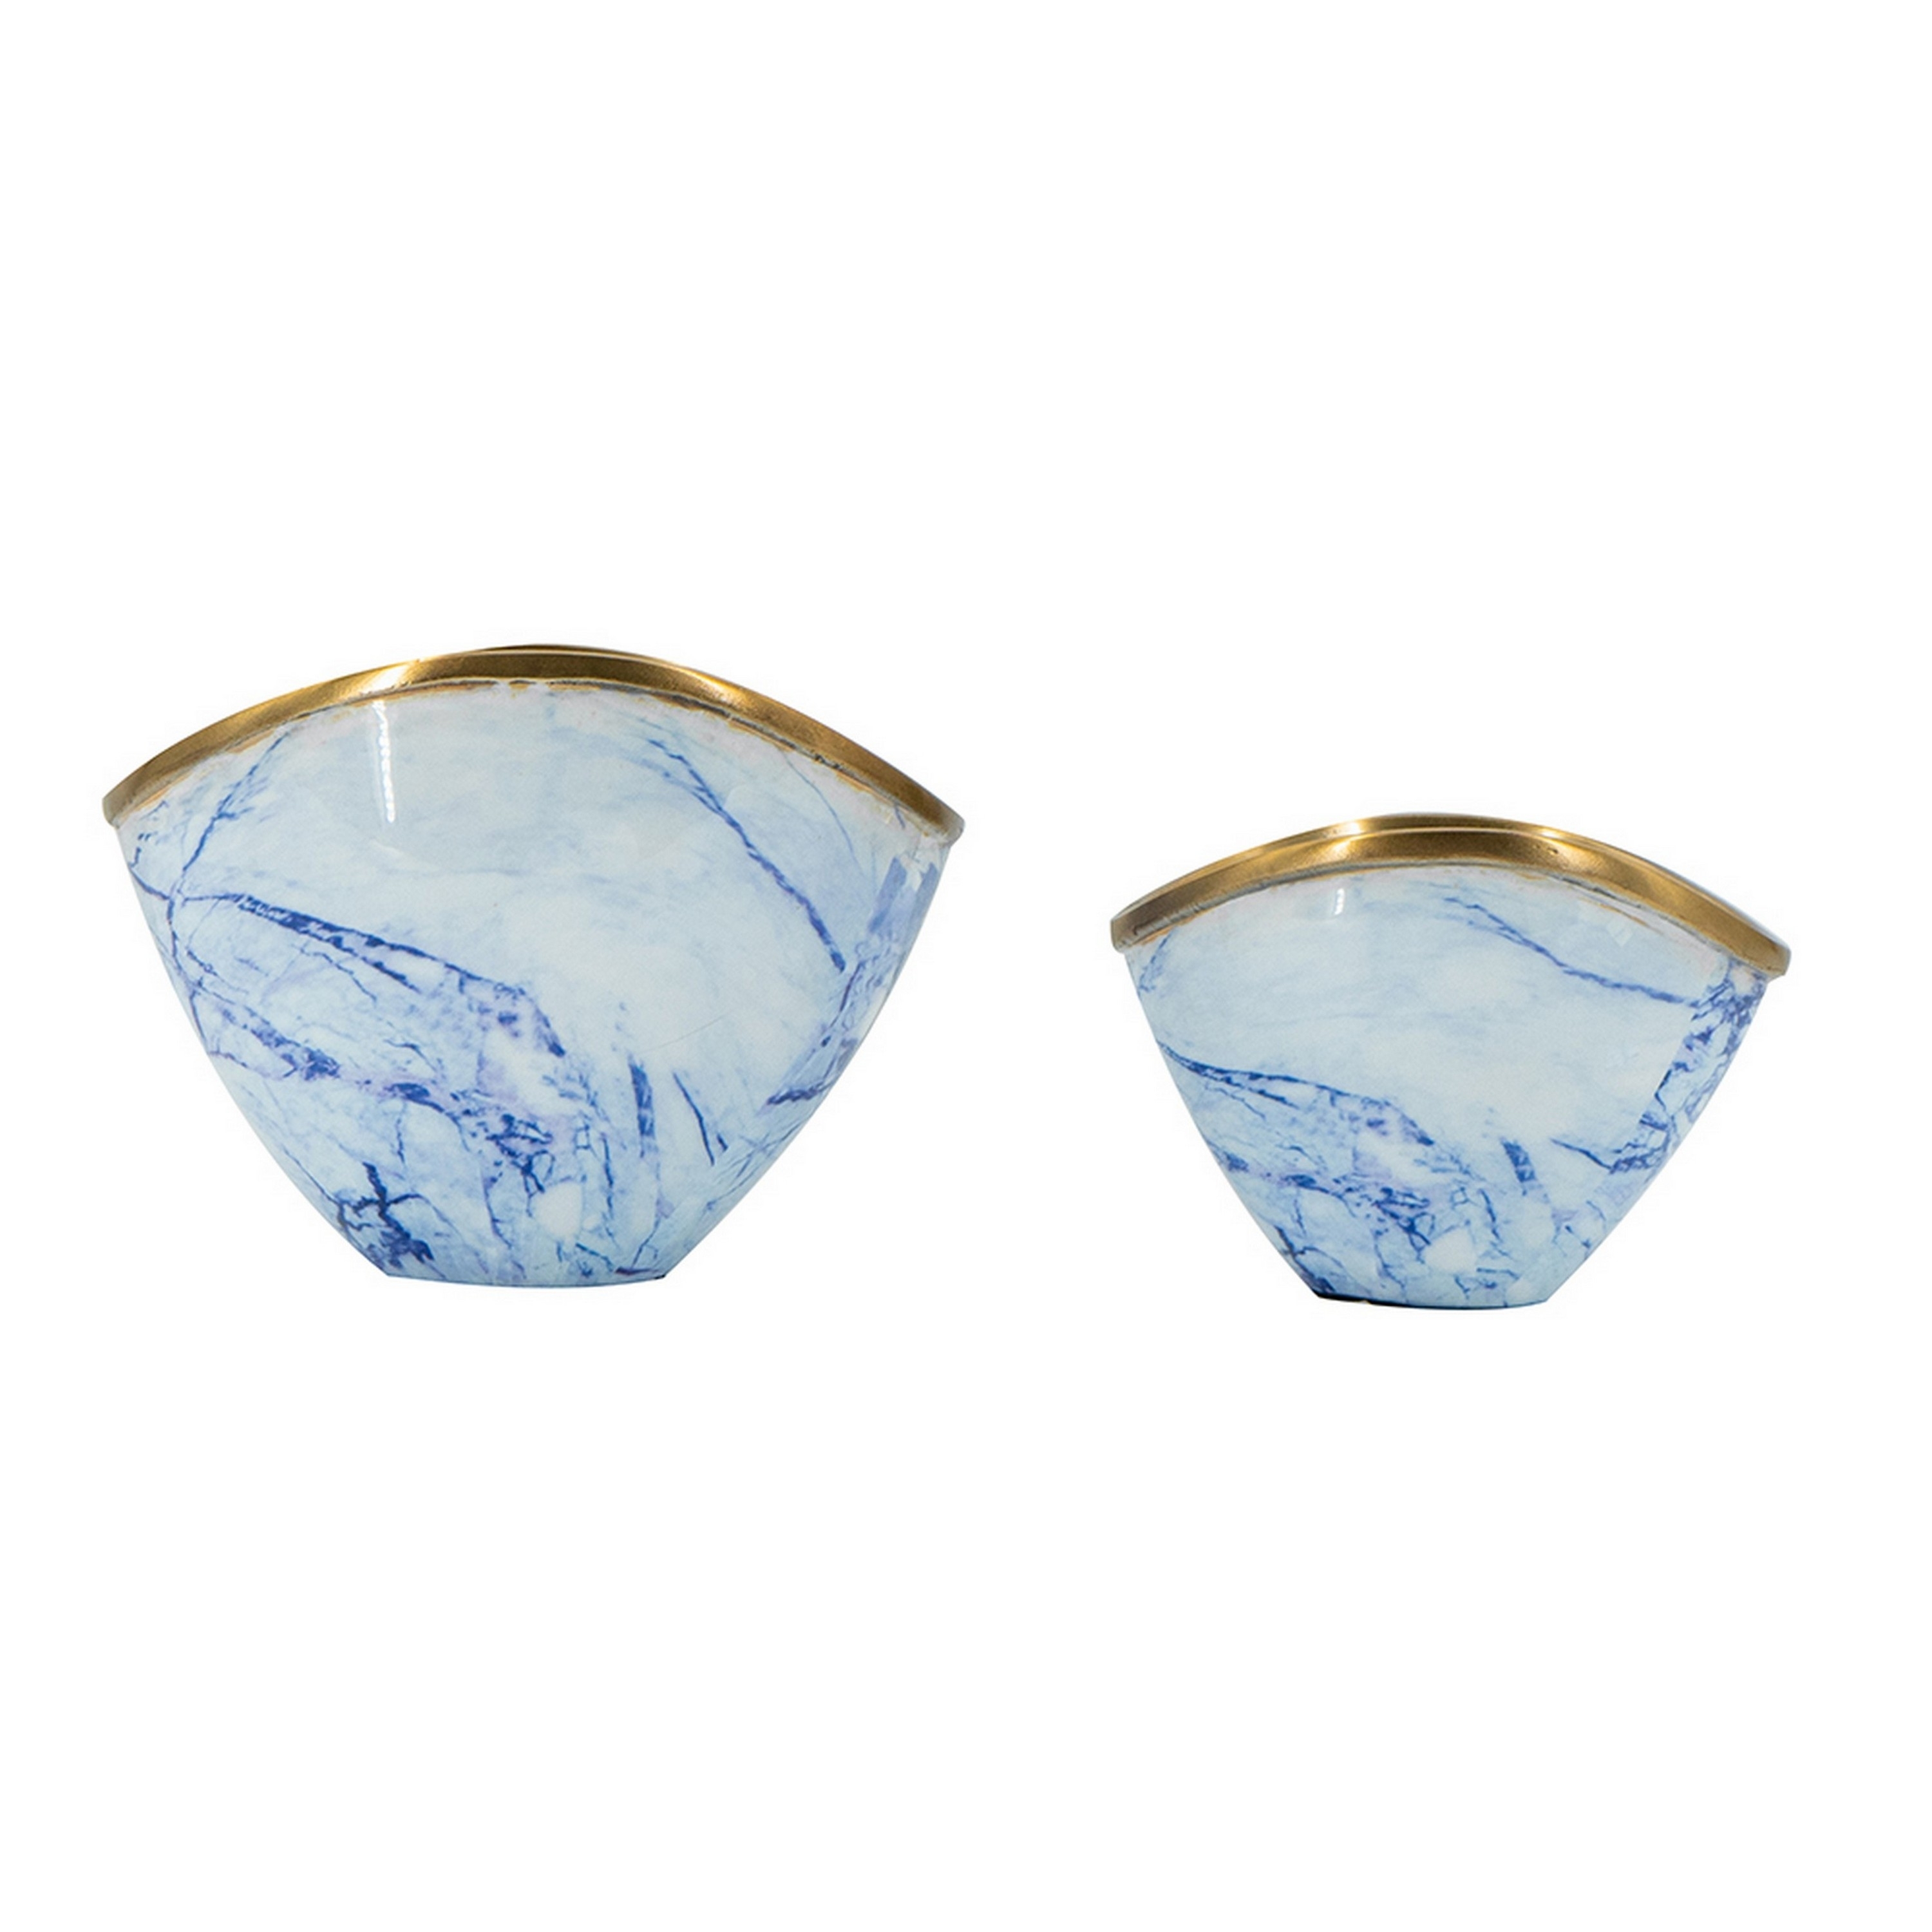 Sinzo Set Of 2 Curved Bowls, Gold Aluminum, Textured Design, Blue, White- Saltoro Sherpi